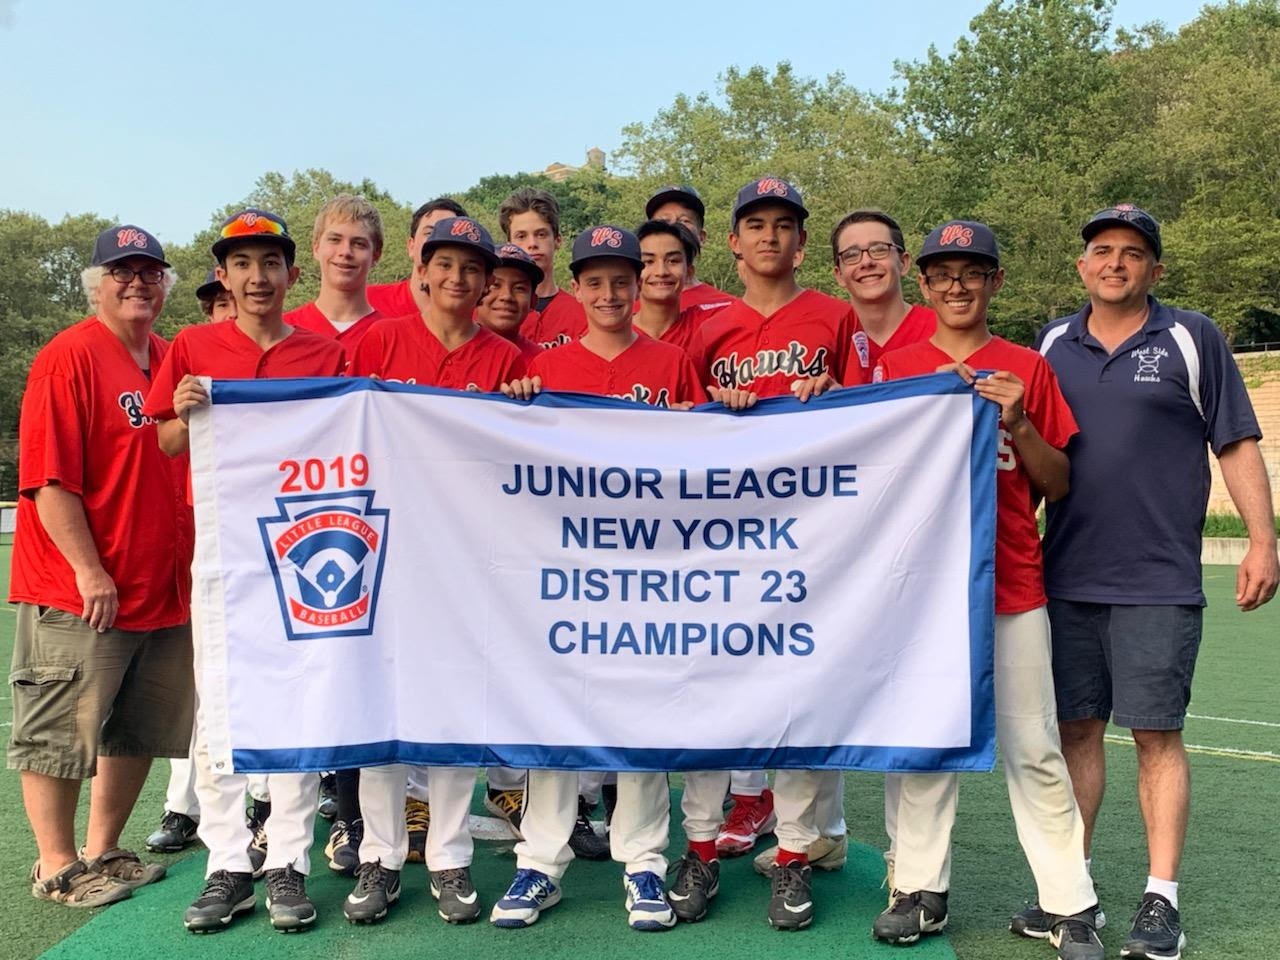 West Side's Juniors Baseball Tournament Team Wins District 23 Championship!